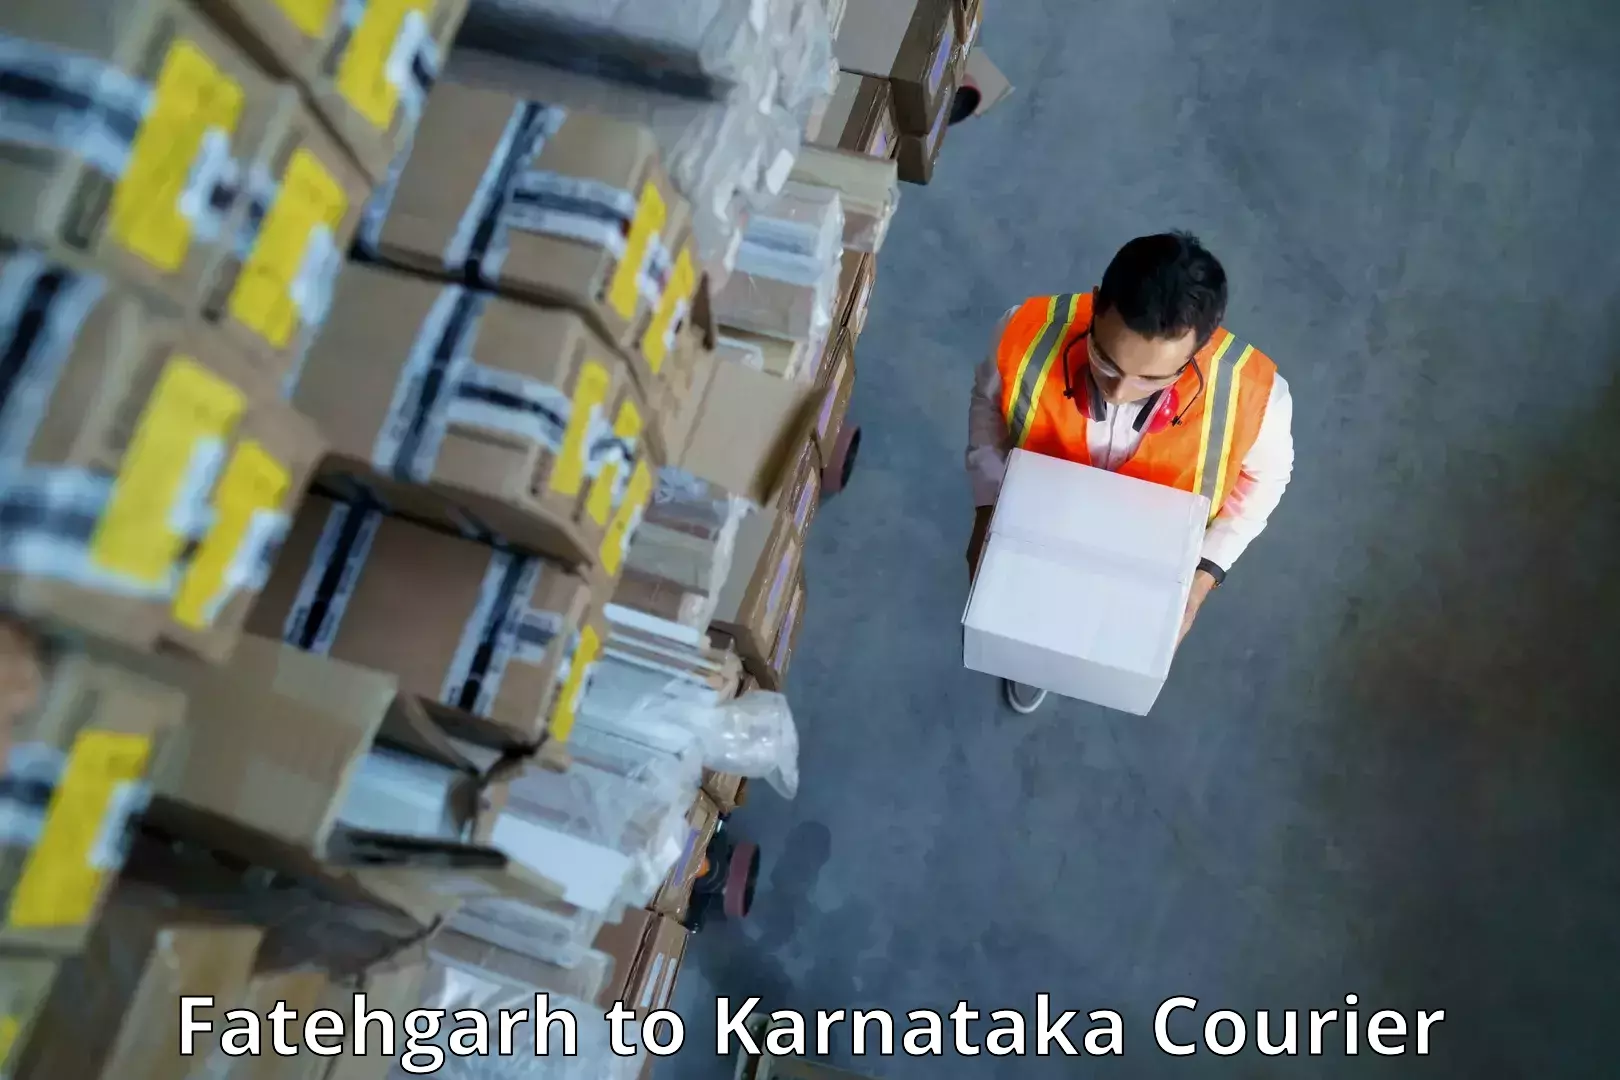 High-performance logistics Fatehgarh to Karnataka